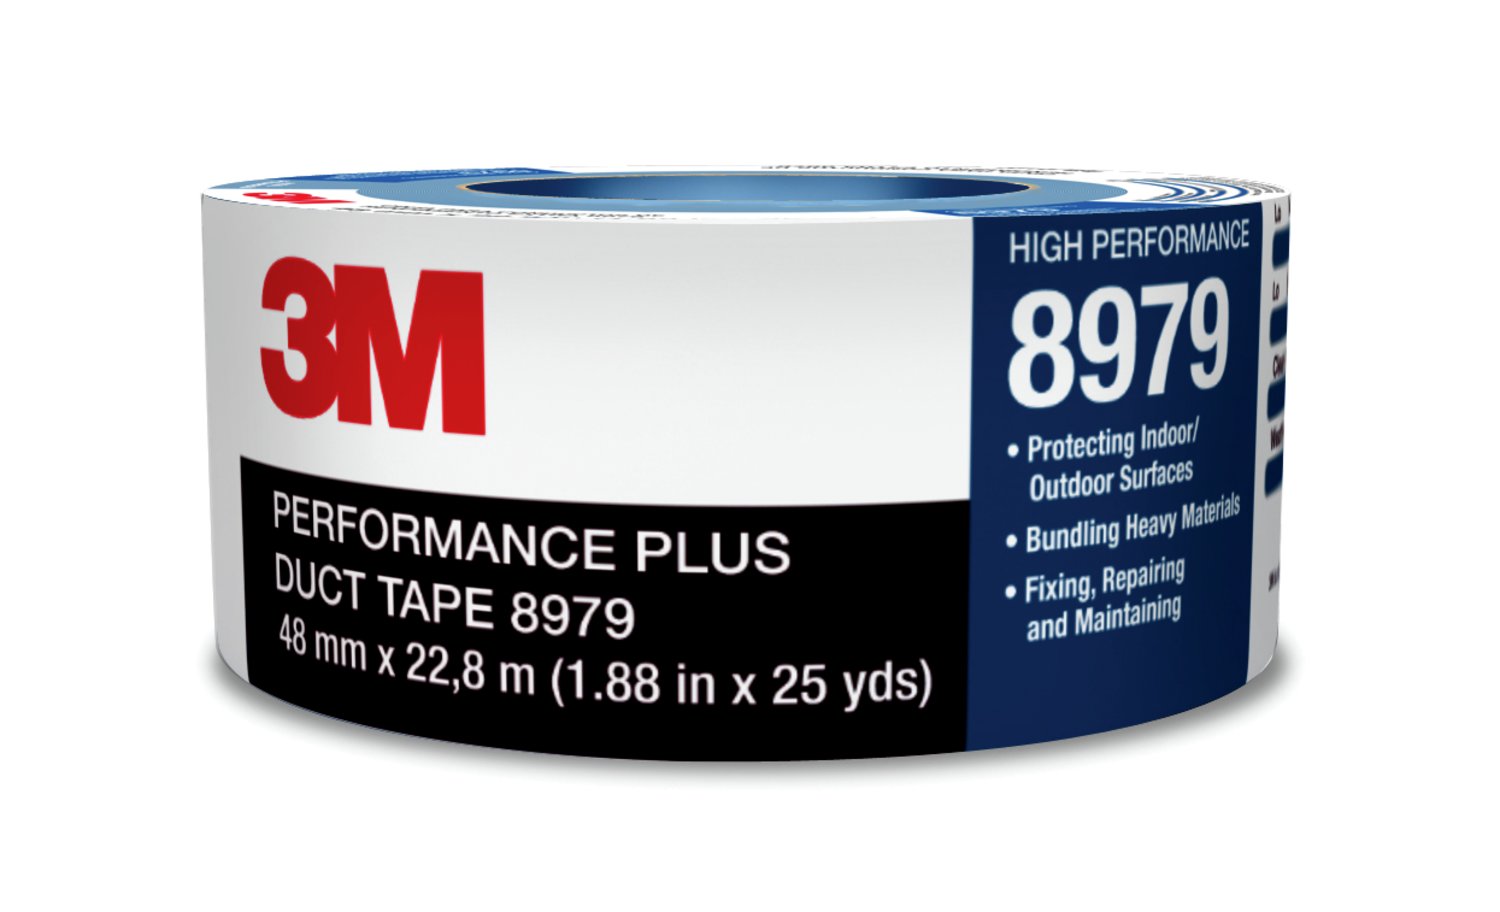 7100139306 - 3M Performance Plus Duct Tape 8979N, Slate Blue, 144 mm x 54.8 m, 12.1
mil, 6 Roll/Case